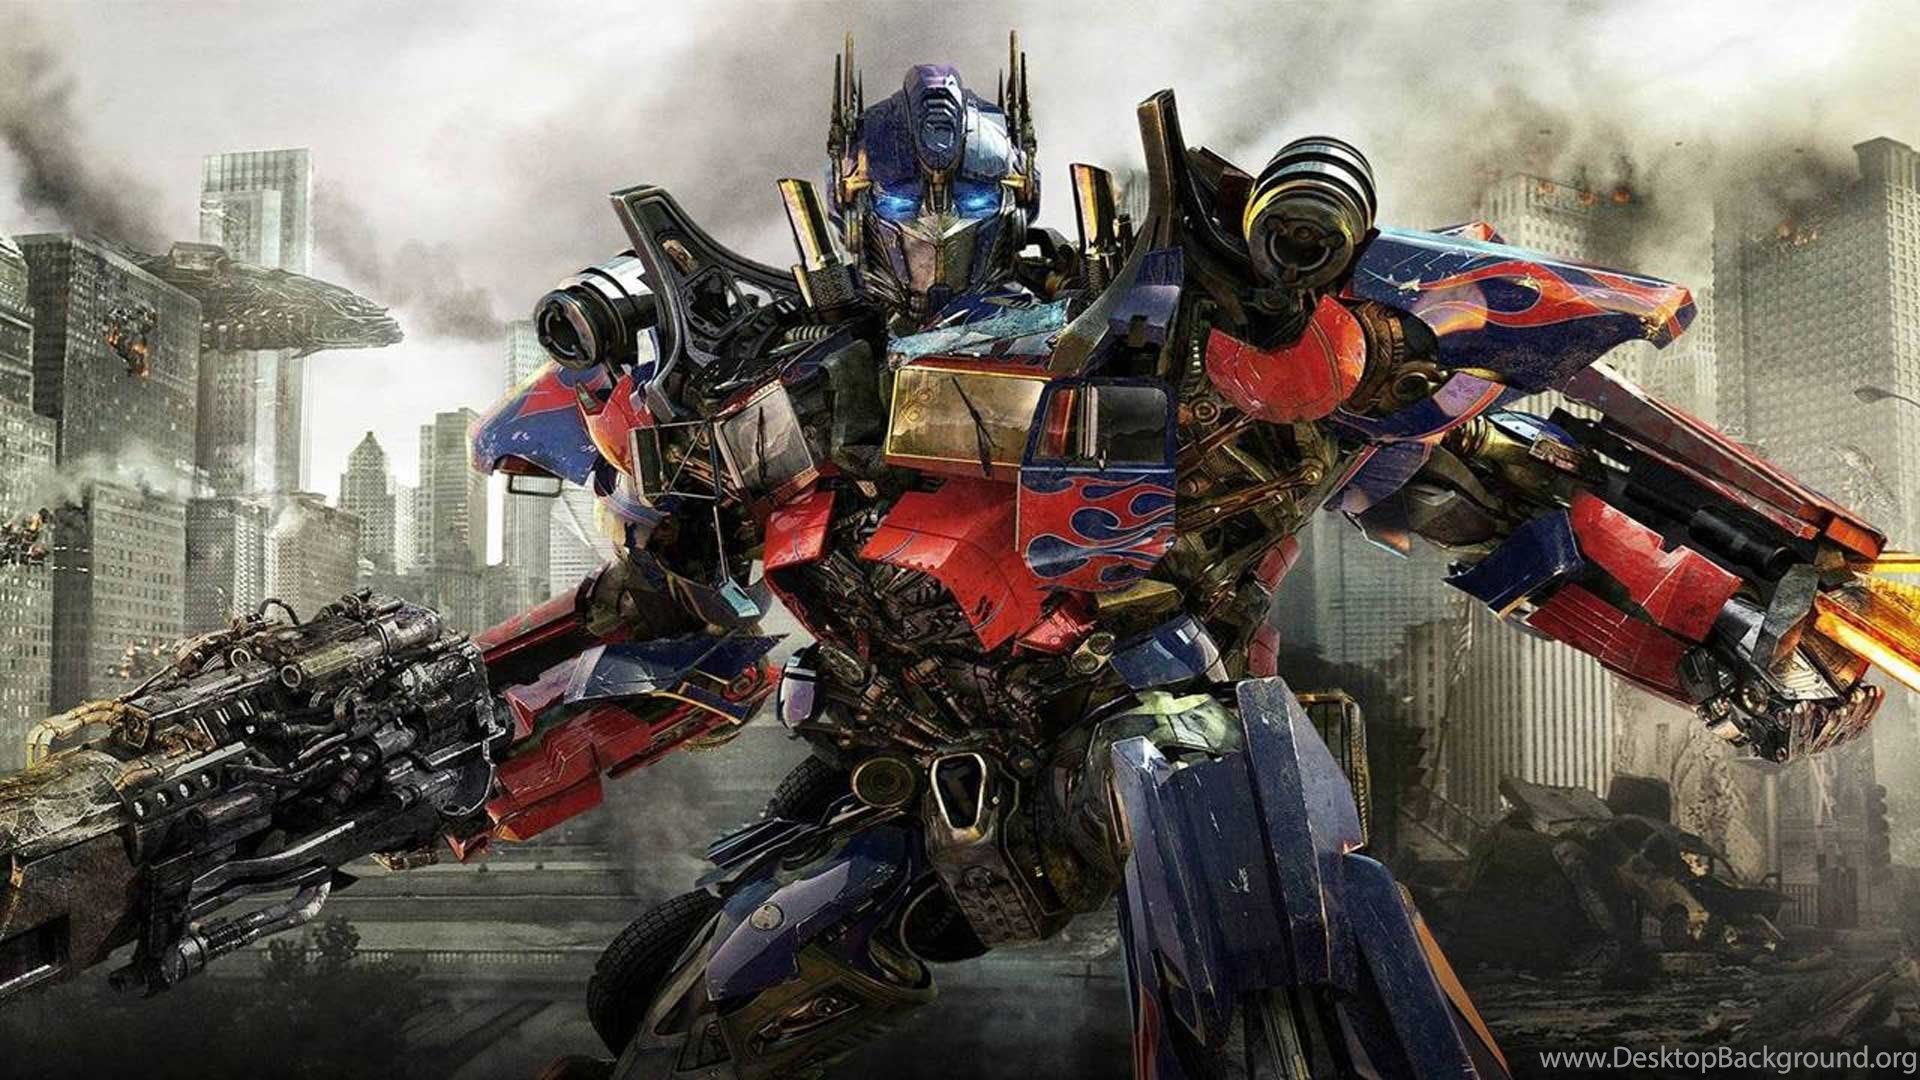 Movie Wallpaper Rakaruan.com: Transformers 4 Optimus Prime. Desktop Background